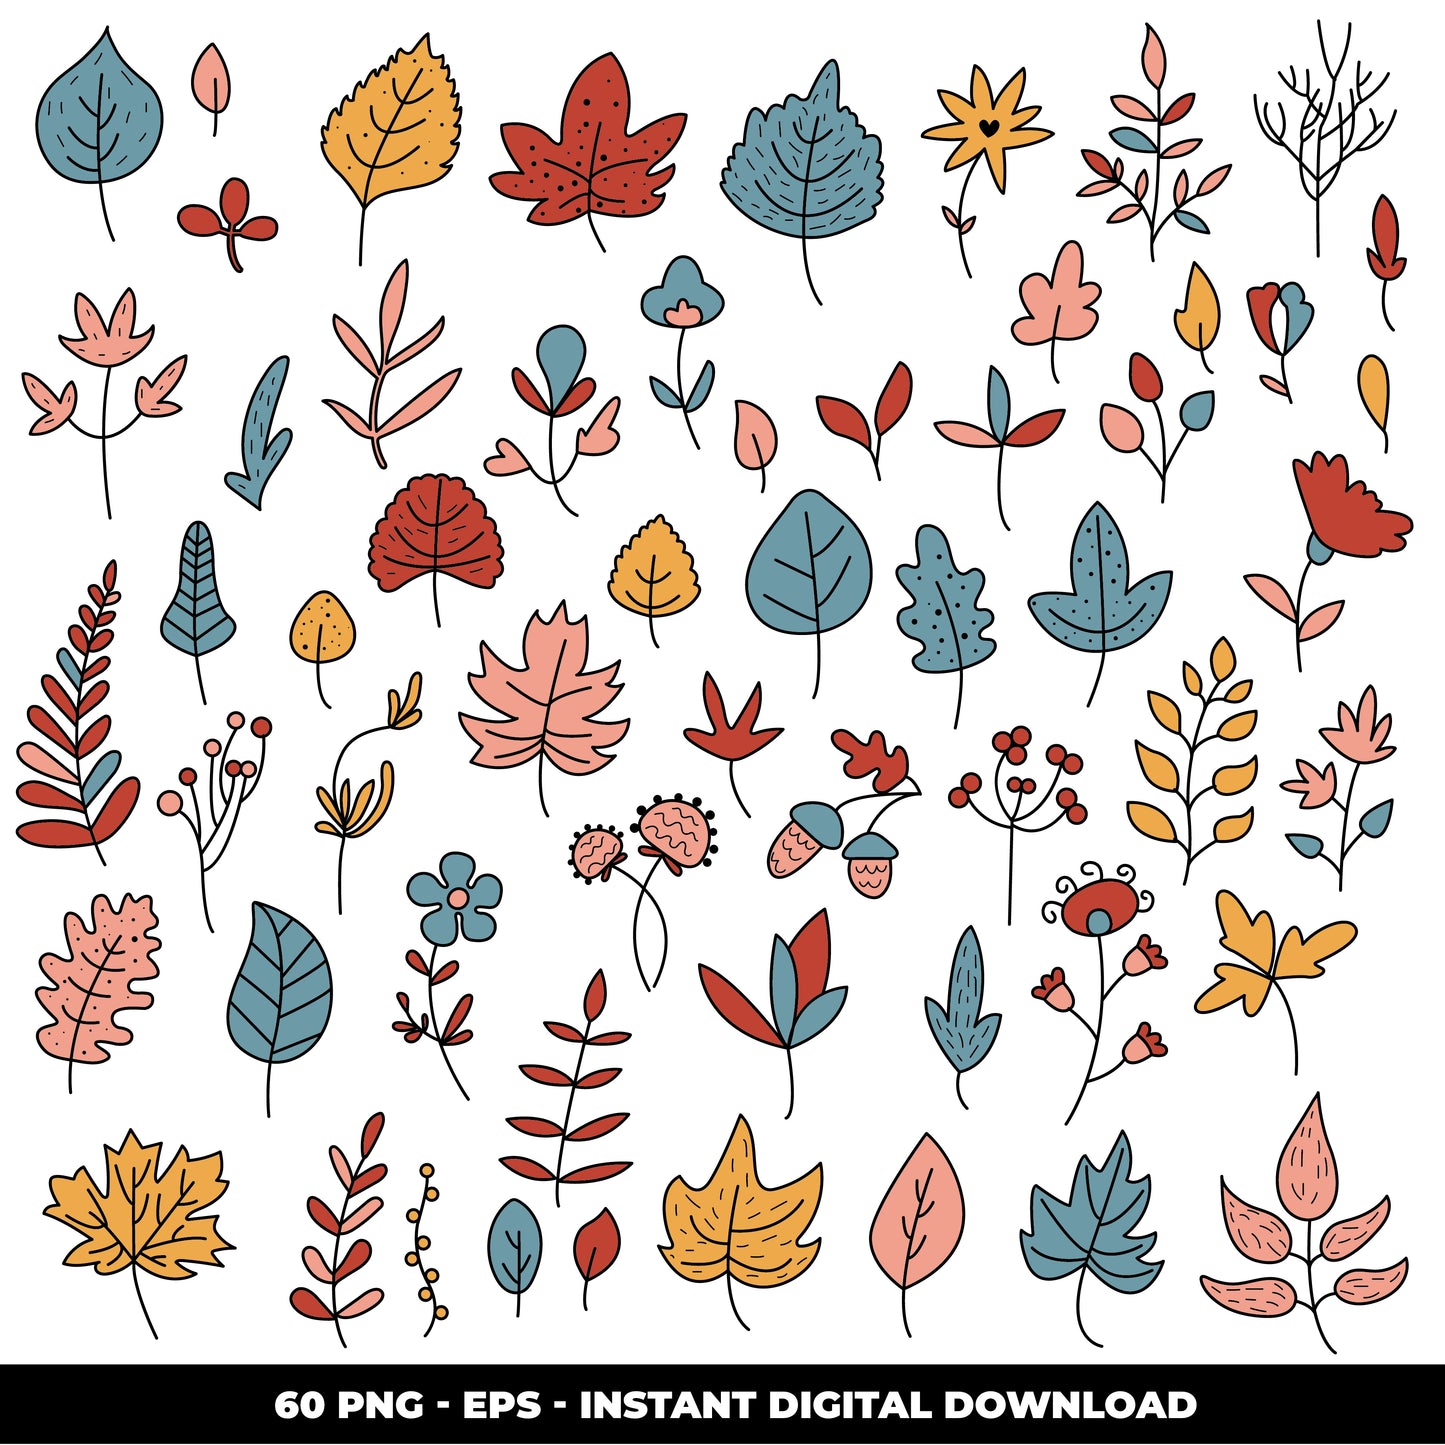 COD828 - Leaves clipart, Plant eps, Paper Leaves, Leaf Templates, Wreath, Cut Files, Leaf Clipart